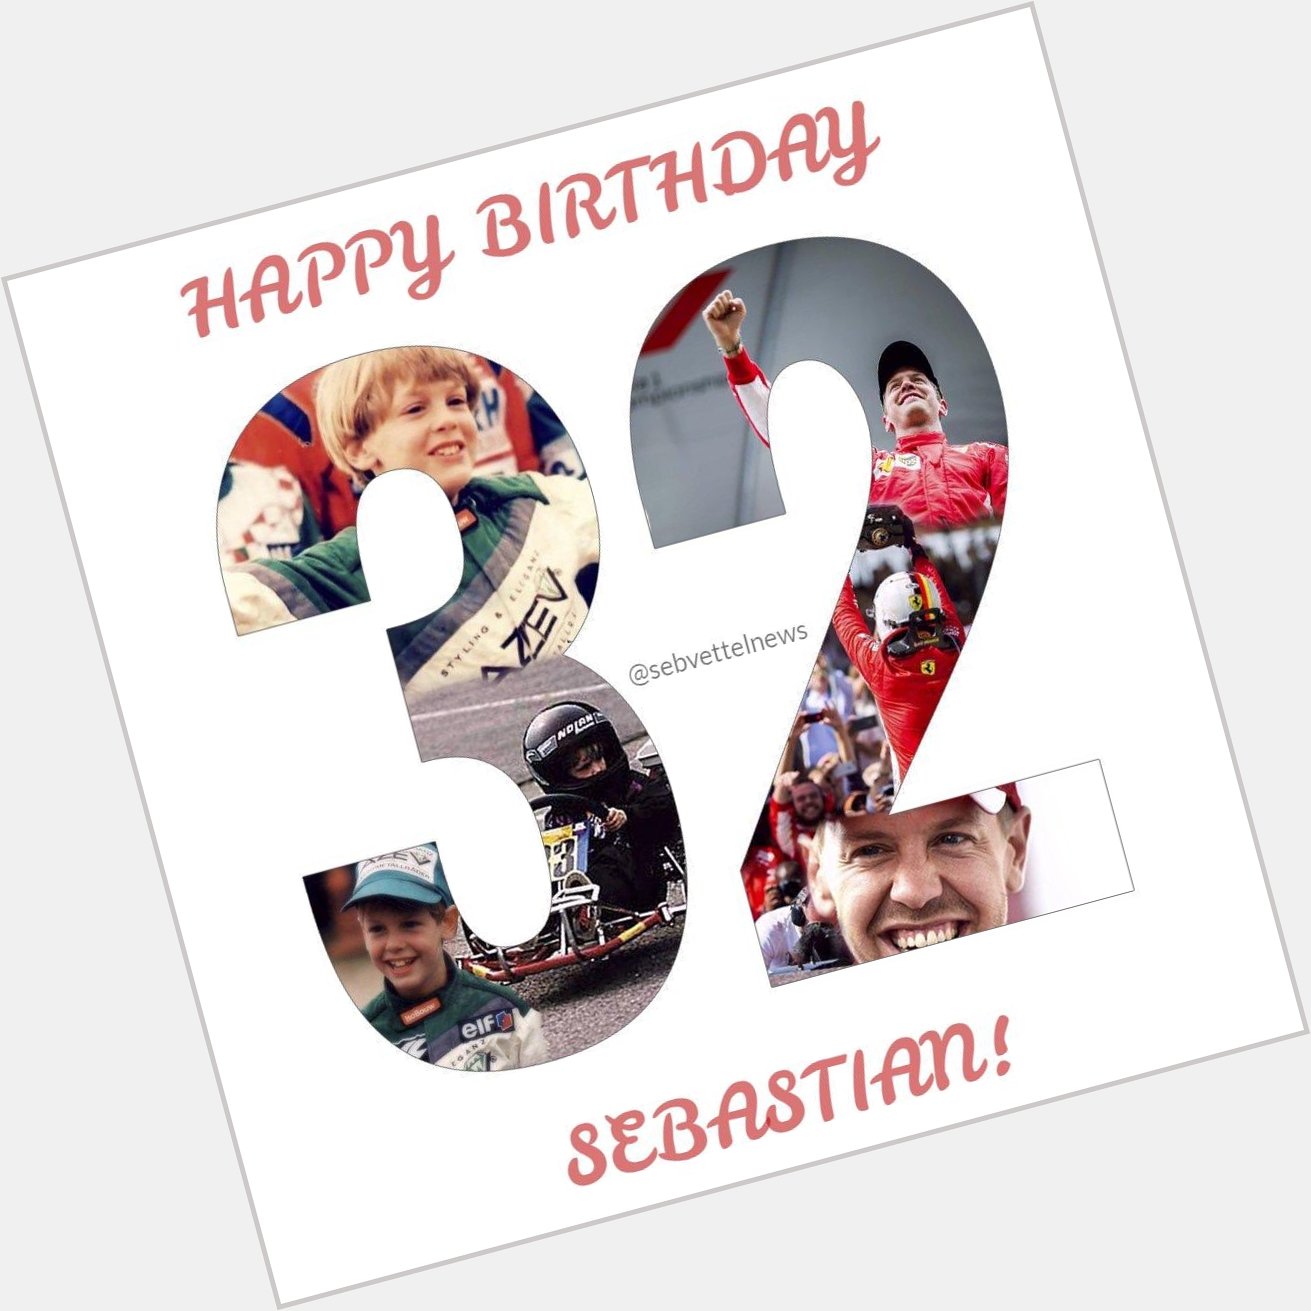 Feliz cumpleaños Sebastian Vettel! Happy Birthday!
Vía 